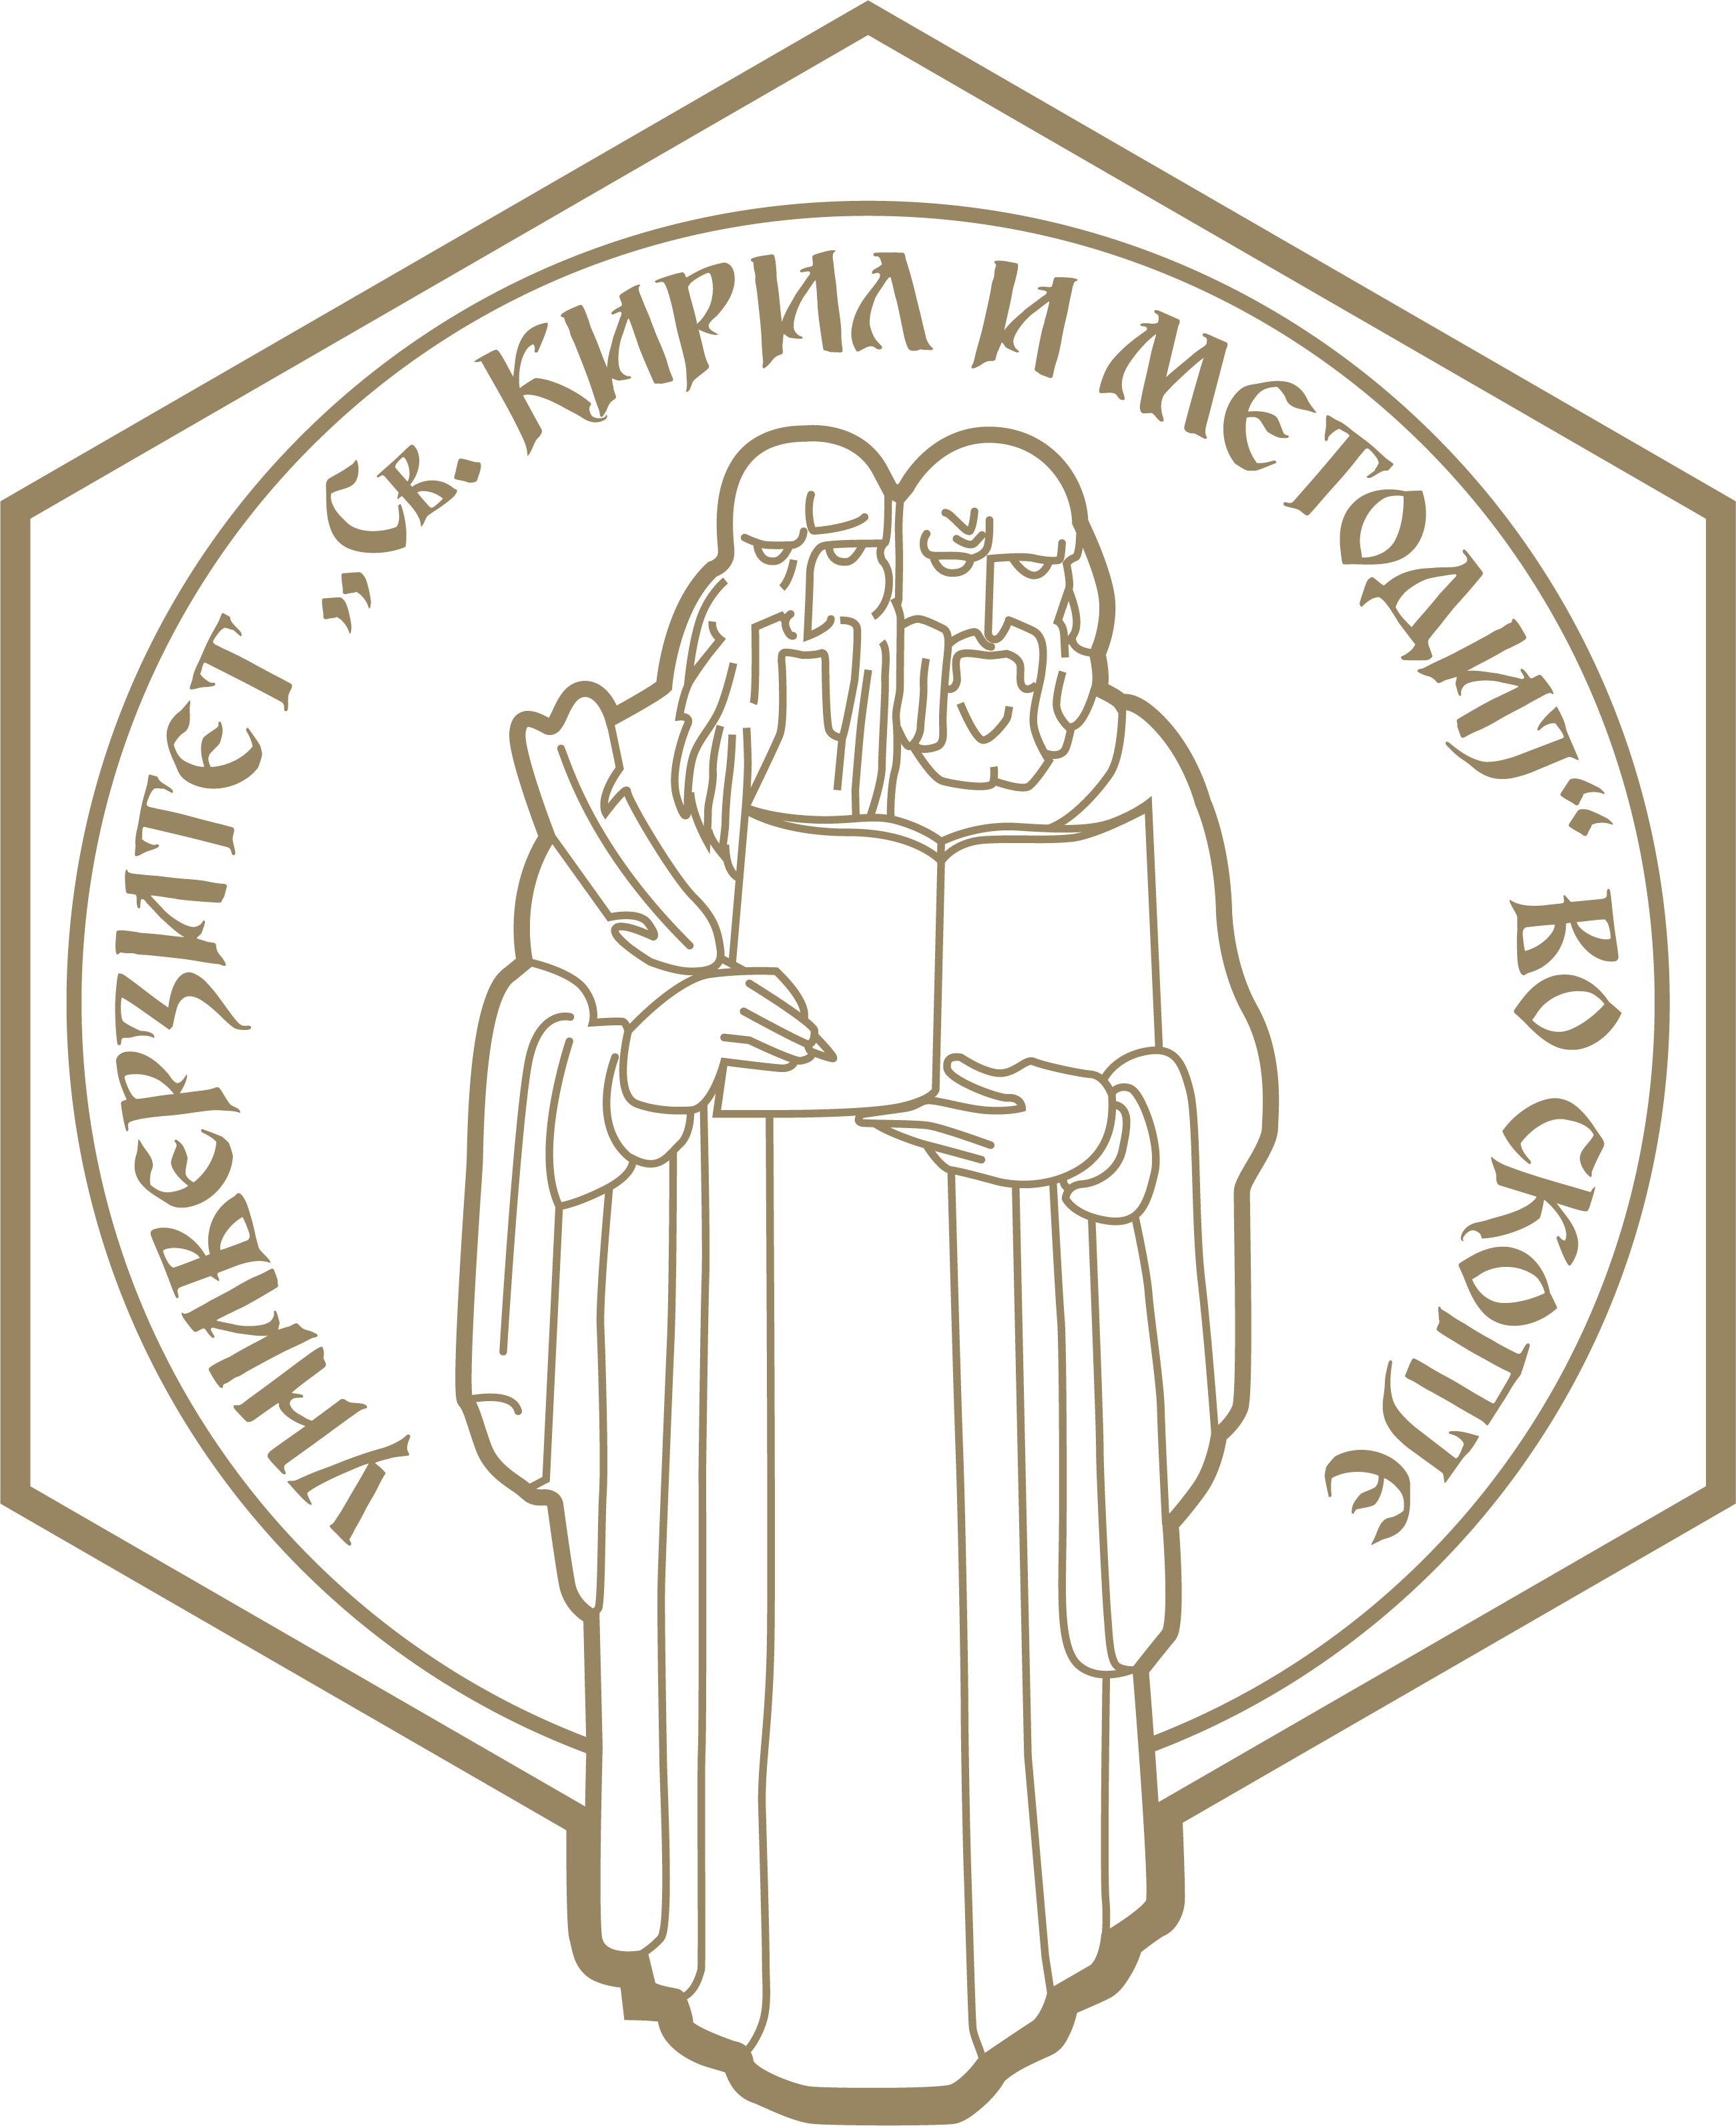 Logo of Ss. Cyril and Methodius University in Skopje